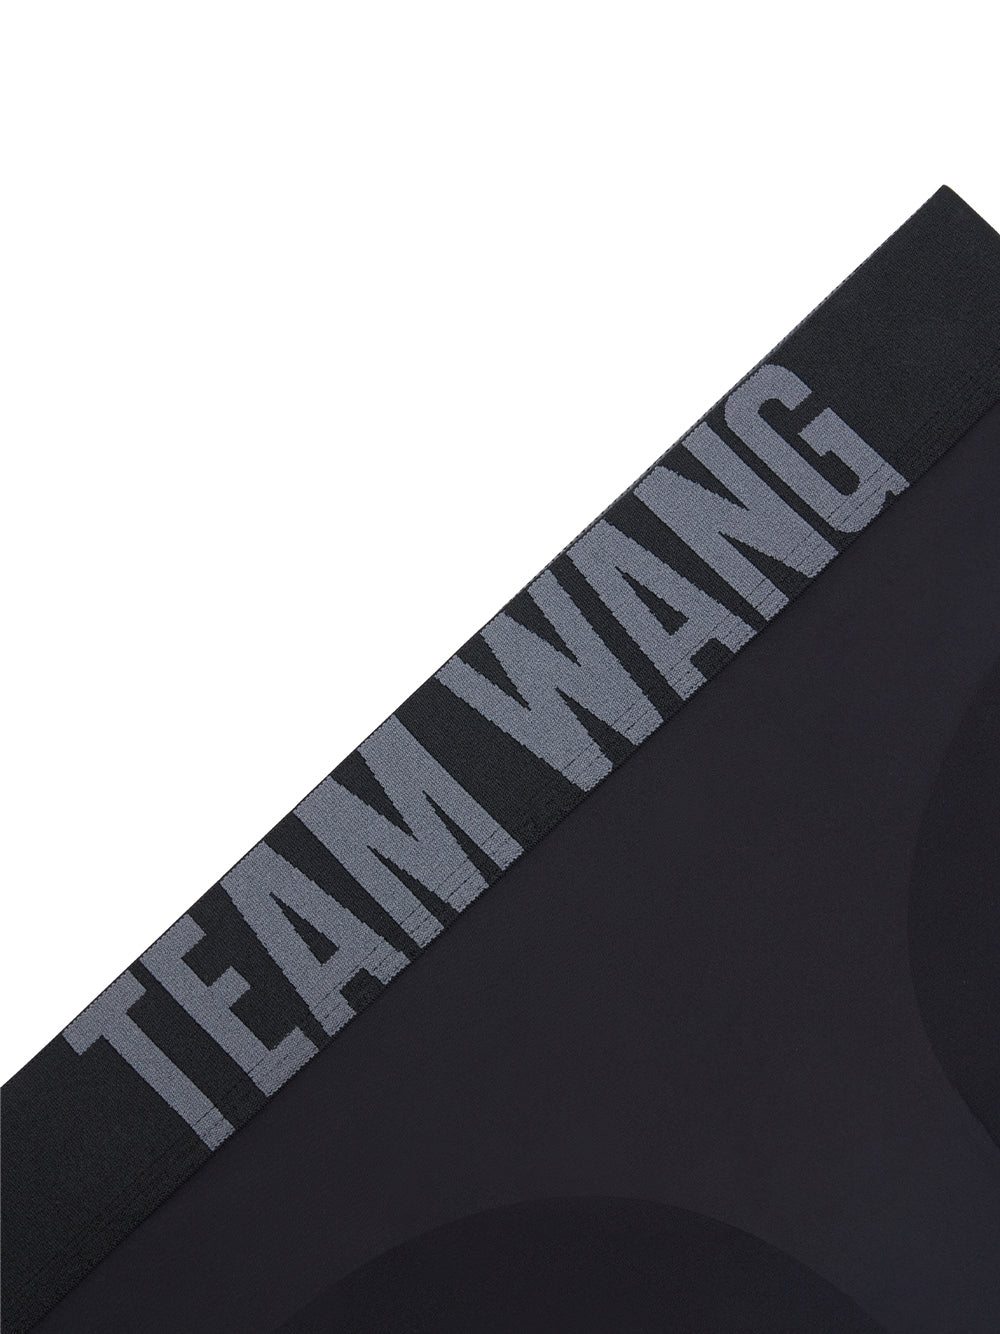 Team-Wang-Design-THE-ORIGINAL-1-Hipster-Black-4